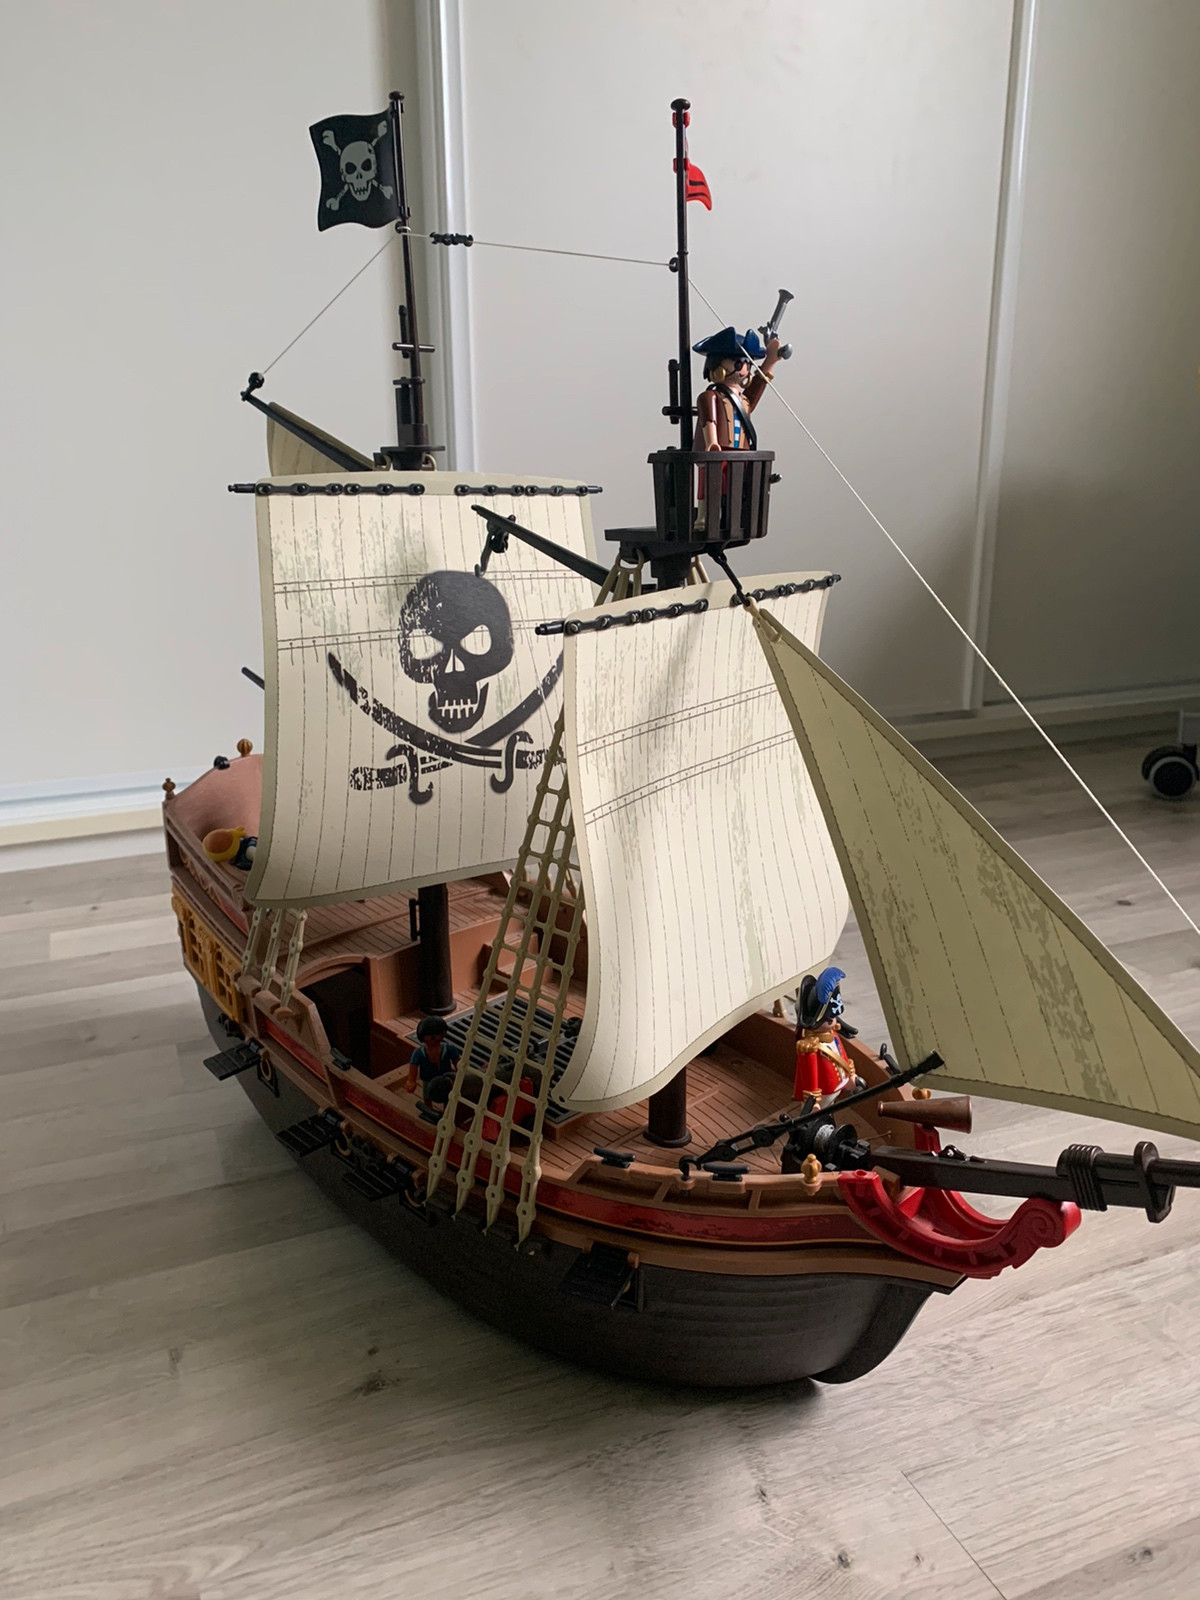 Playmobil pirate, sailing, fishing boat